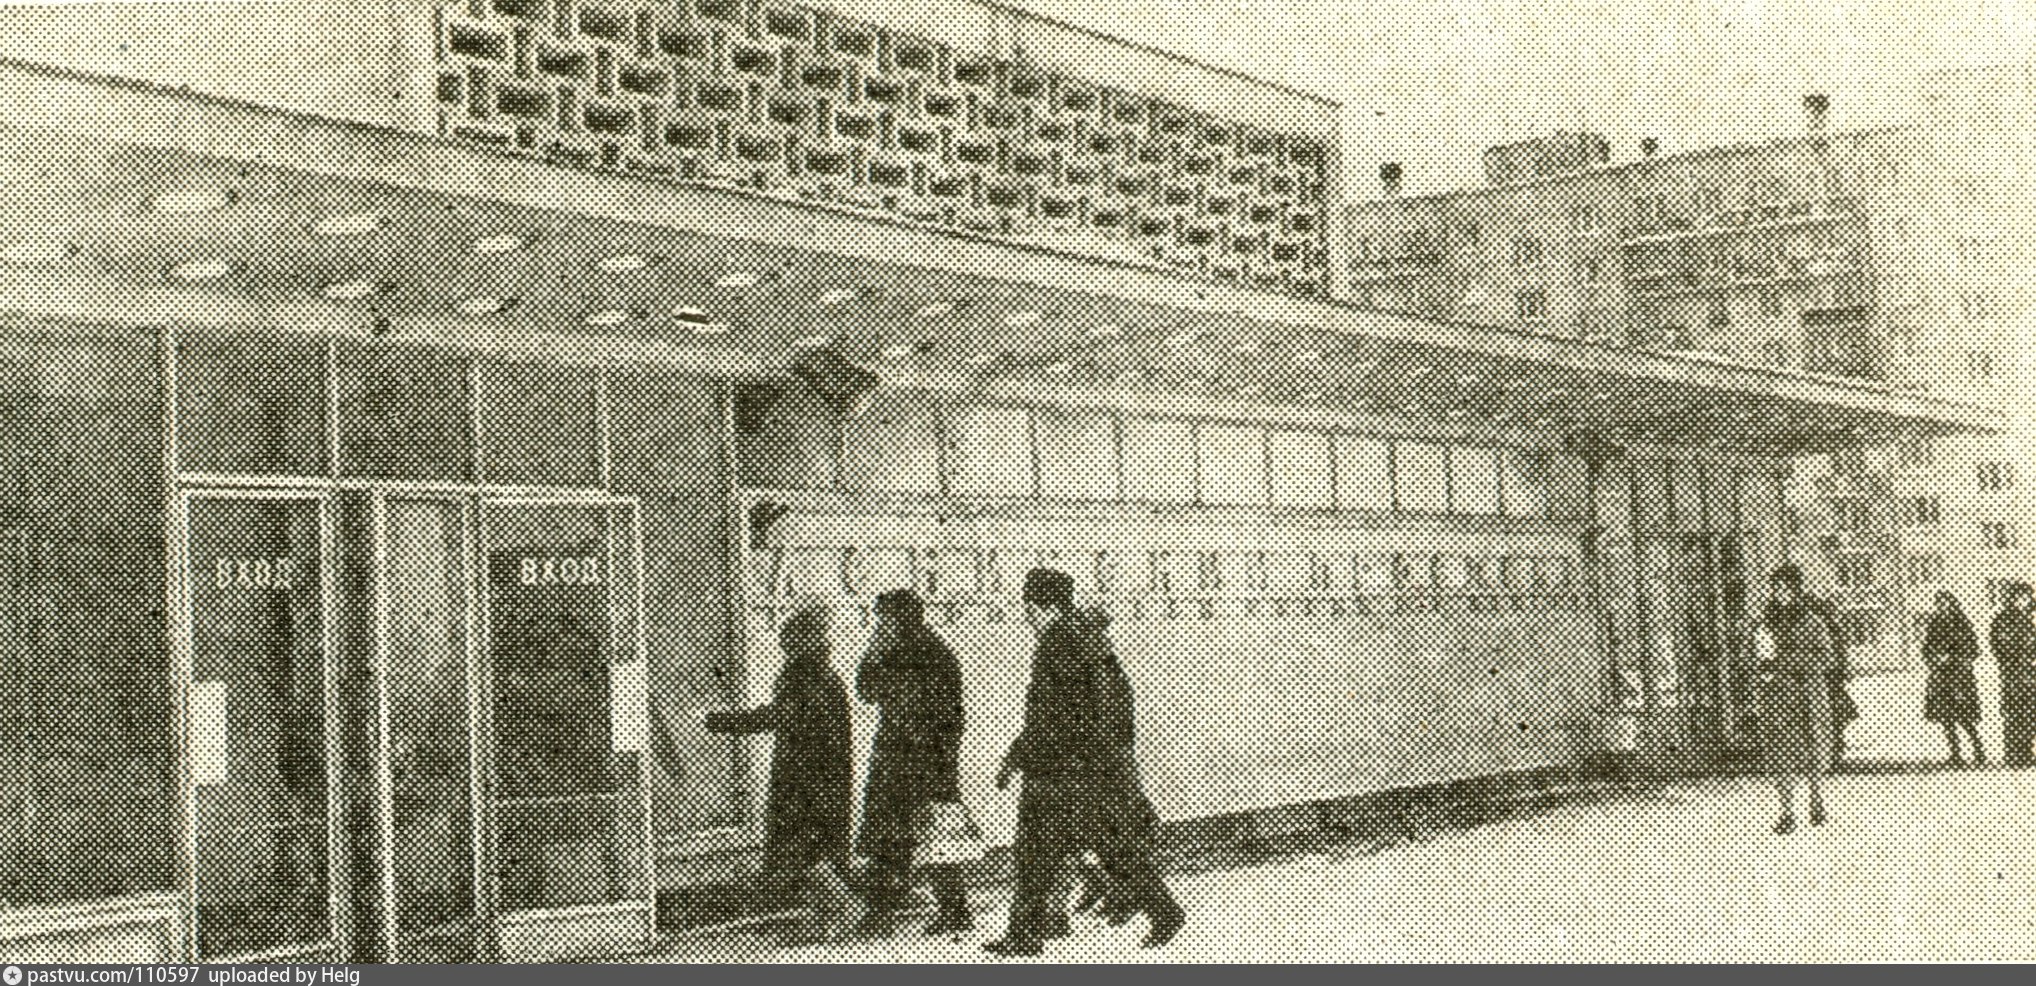 Метро Ленинский проспект 1980